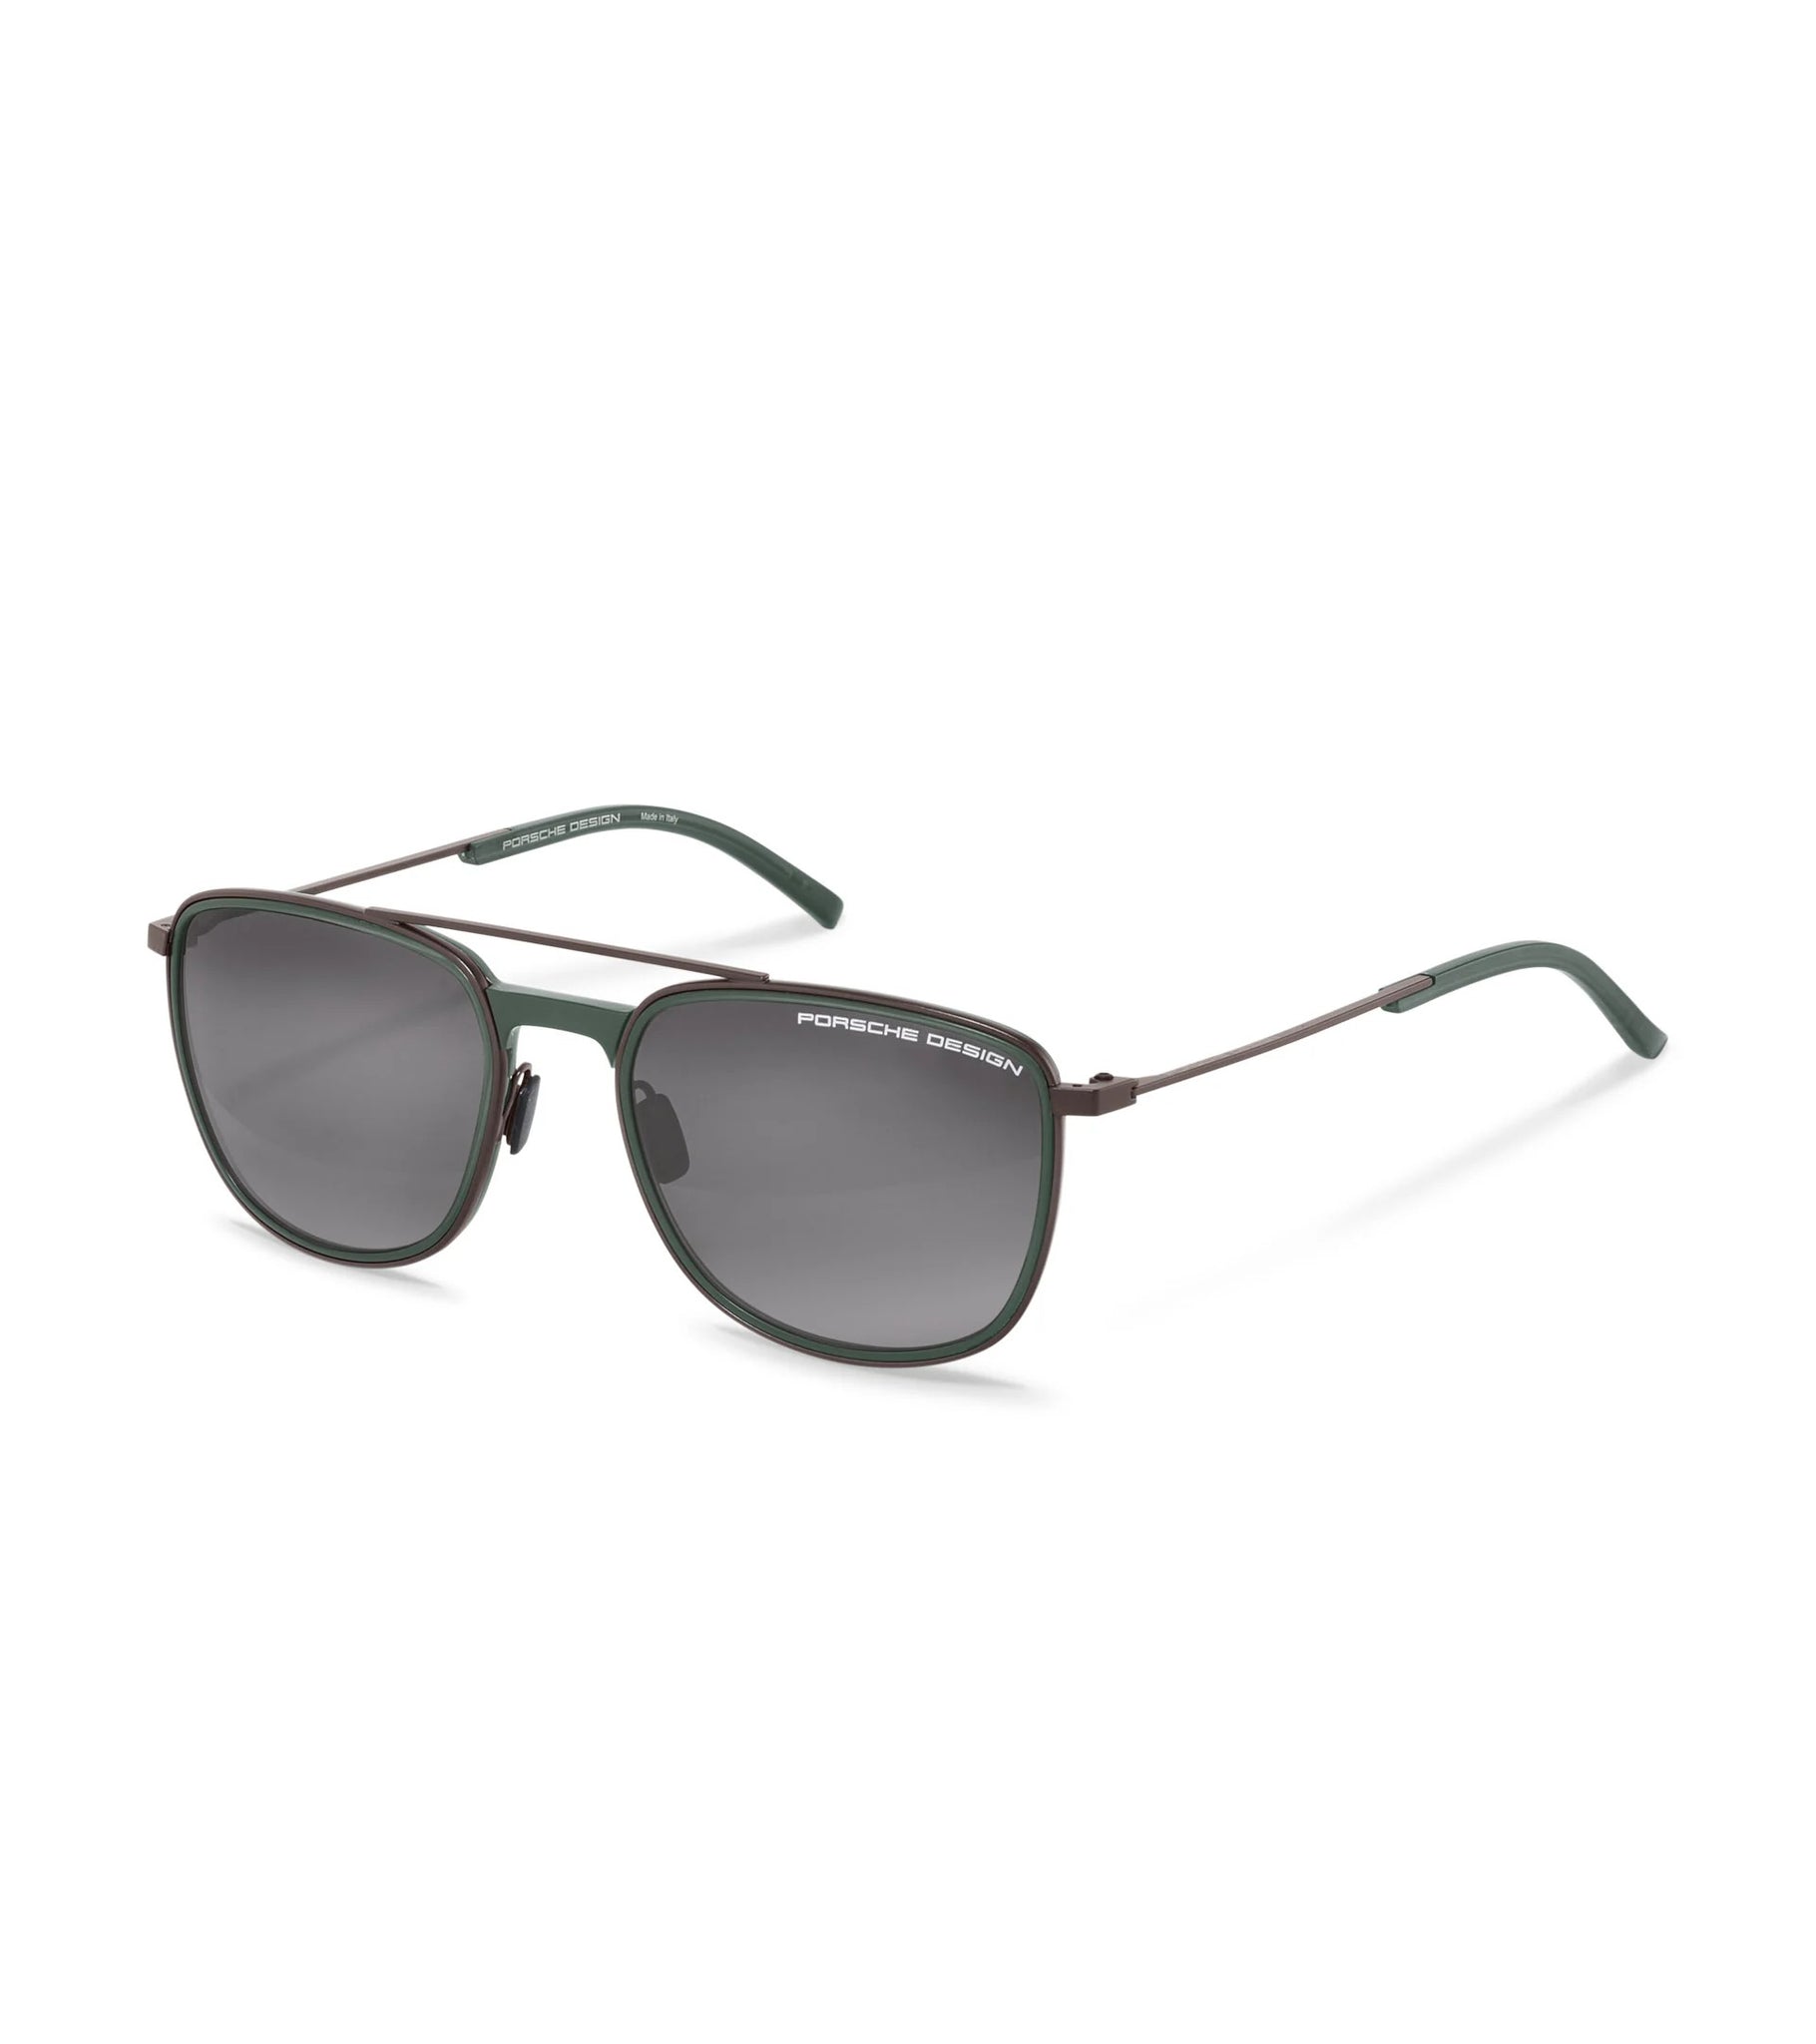 Porsche Design Men's Gradient Grey Square Sunglasses